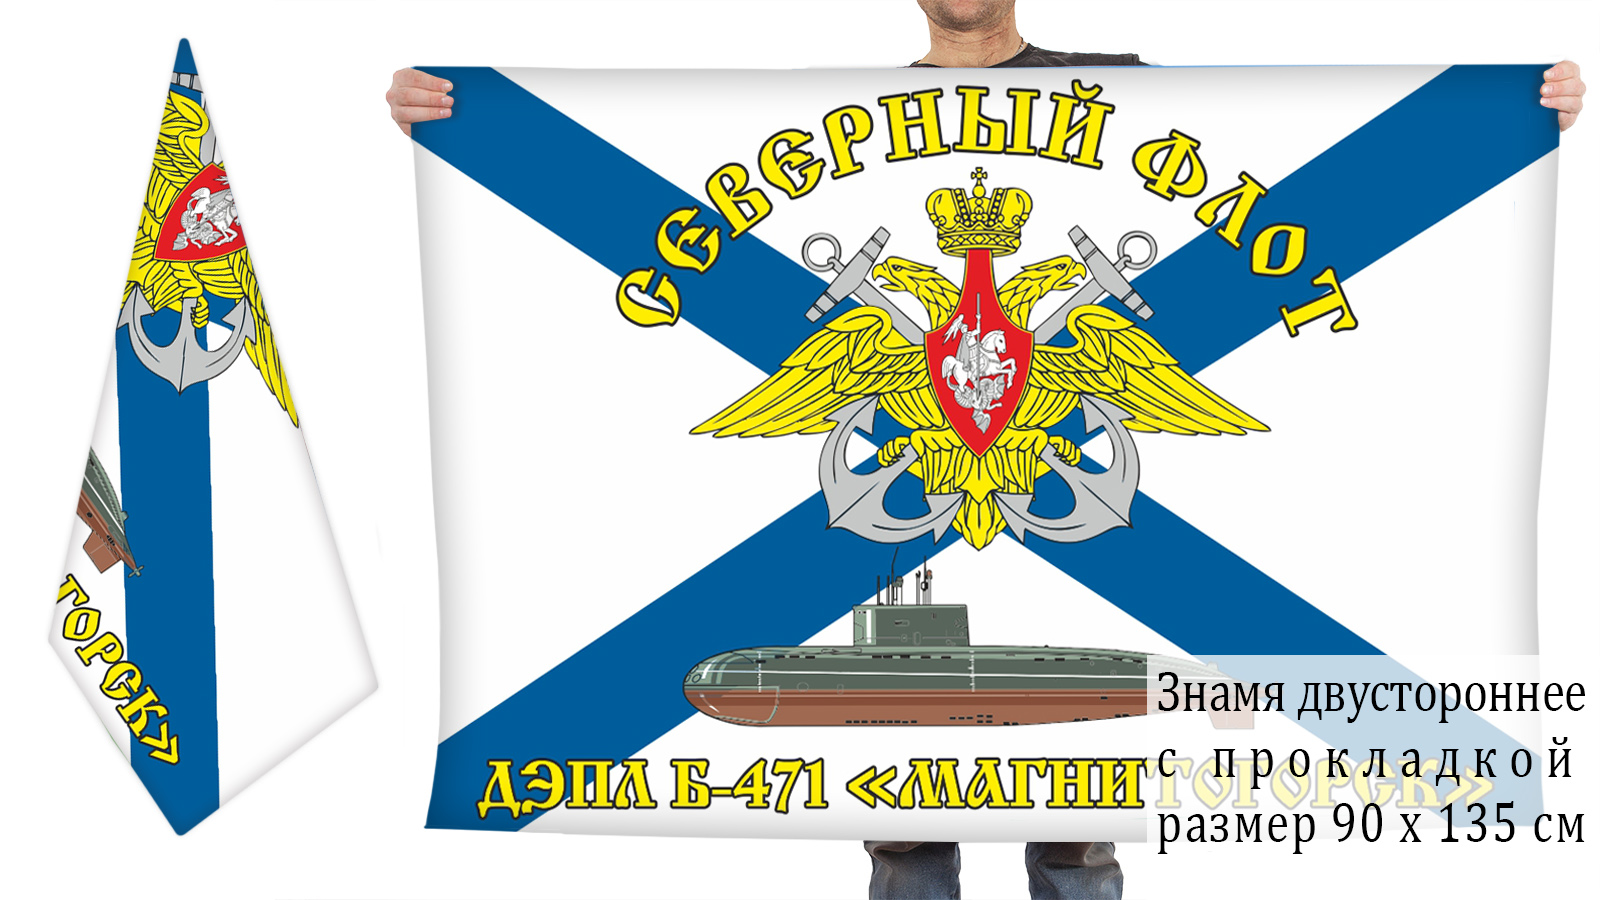 Заказать флаг Б-471 Магнитогорск